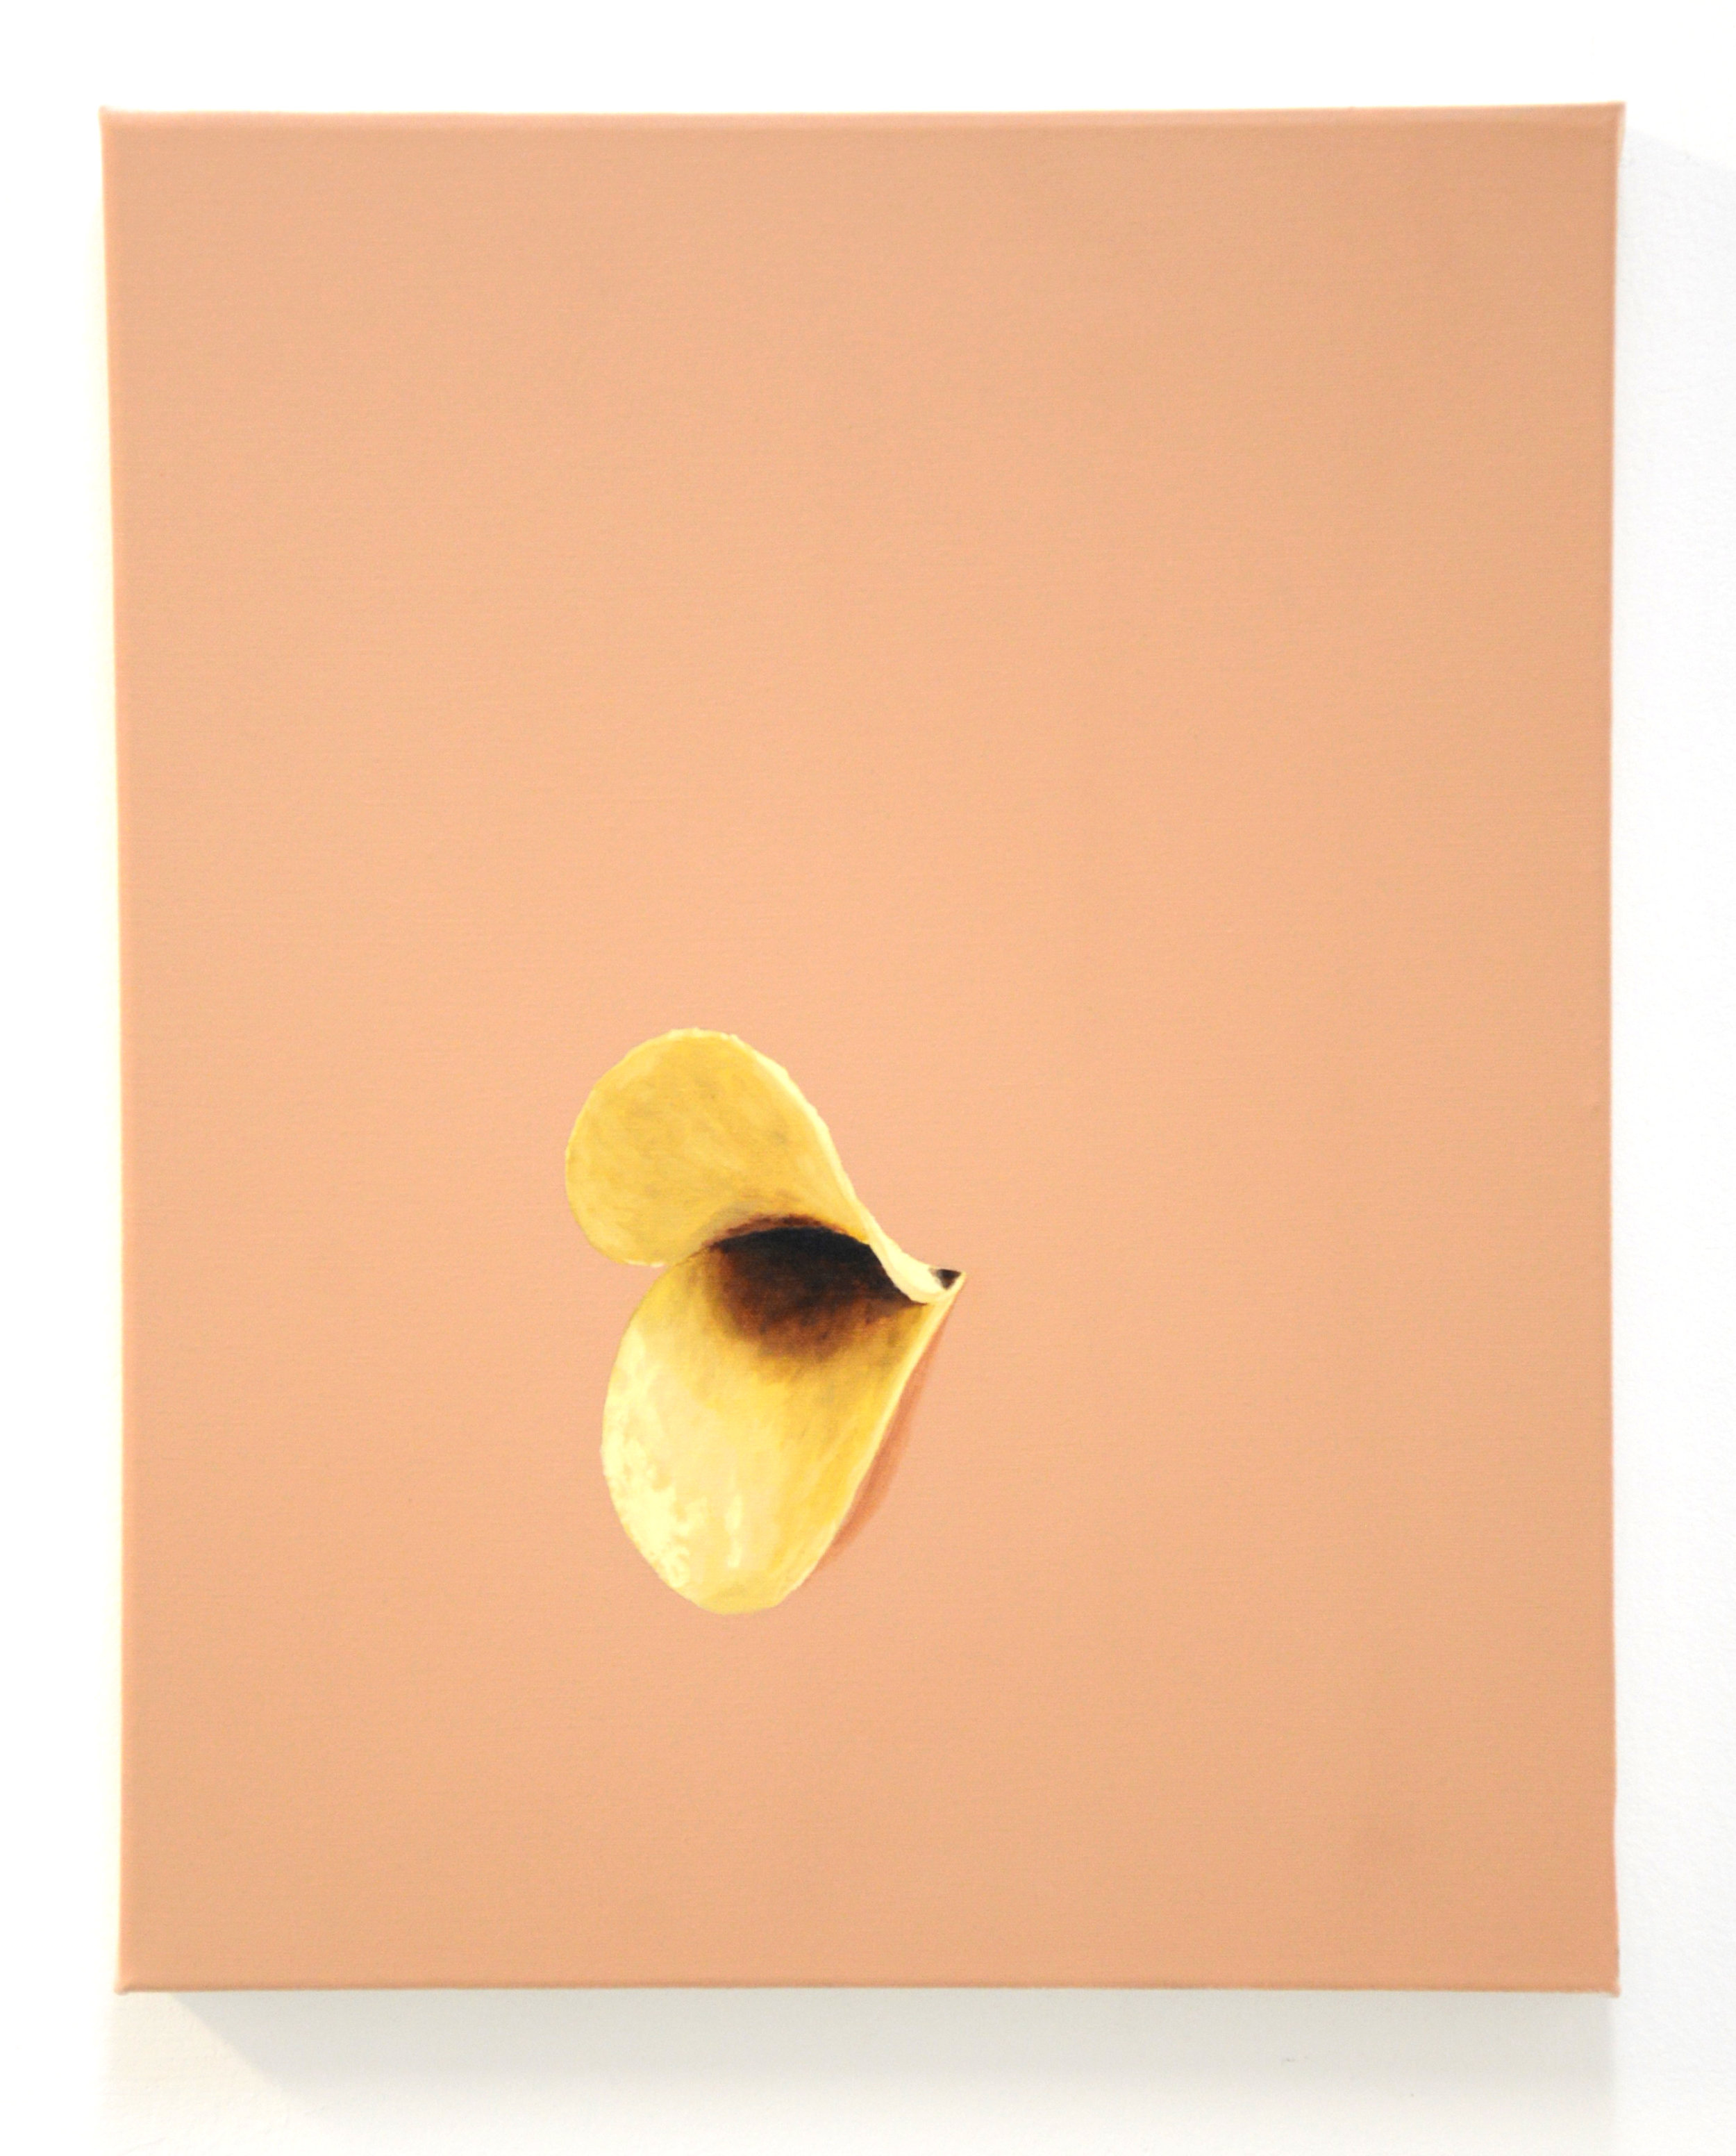 Pringles Duck, oil on canvas, 40cm x 50cm, 2016